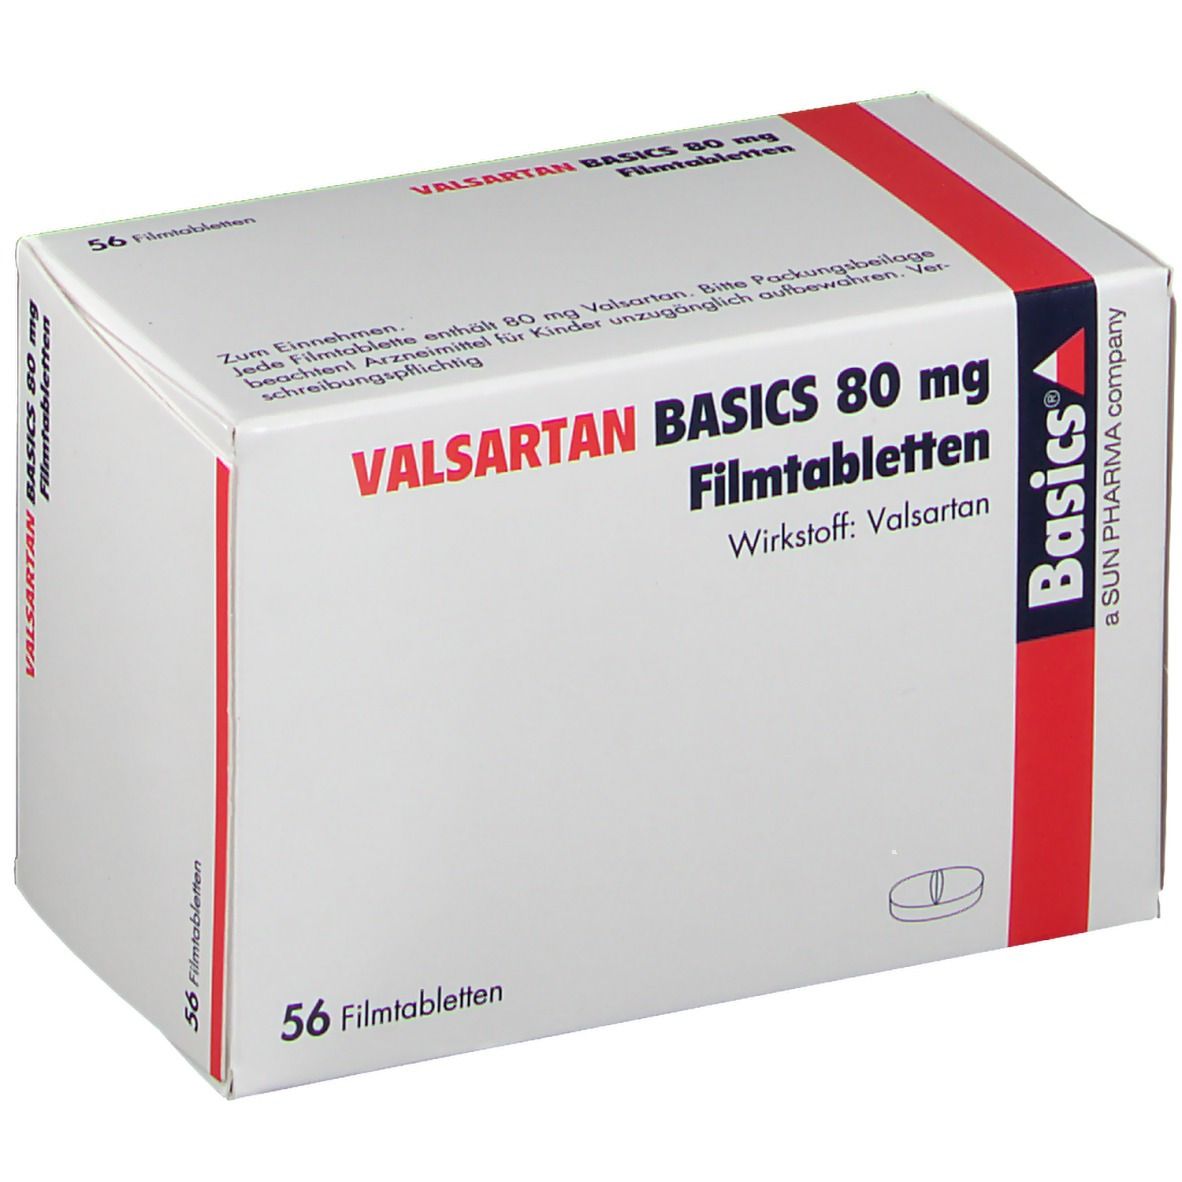 VALSARTAN BASICS 80 mg